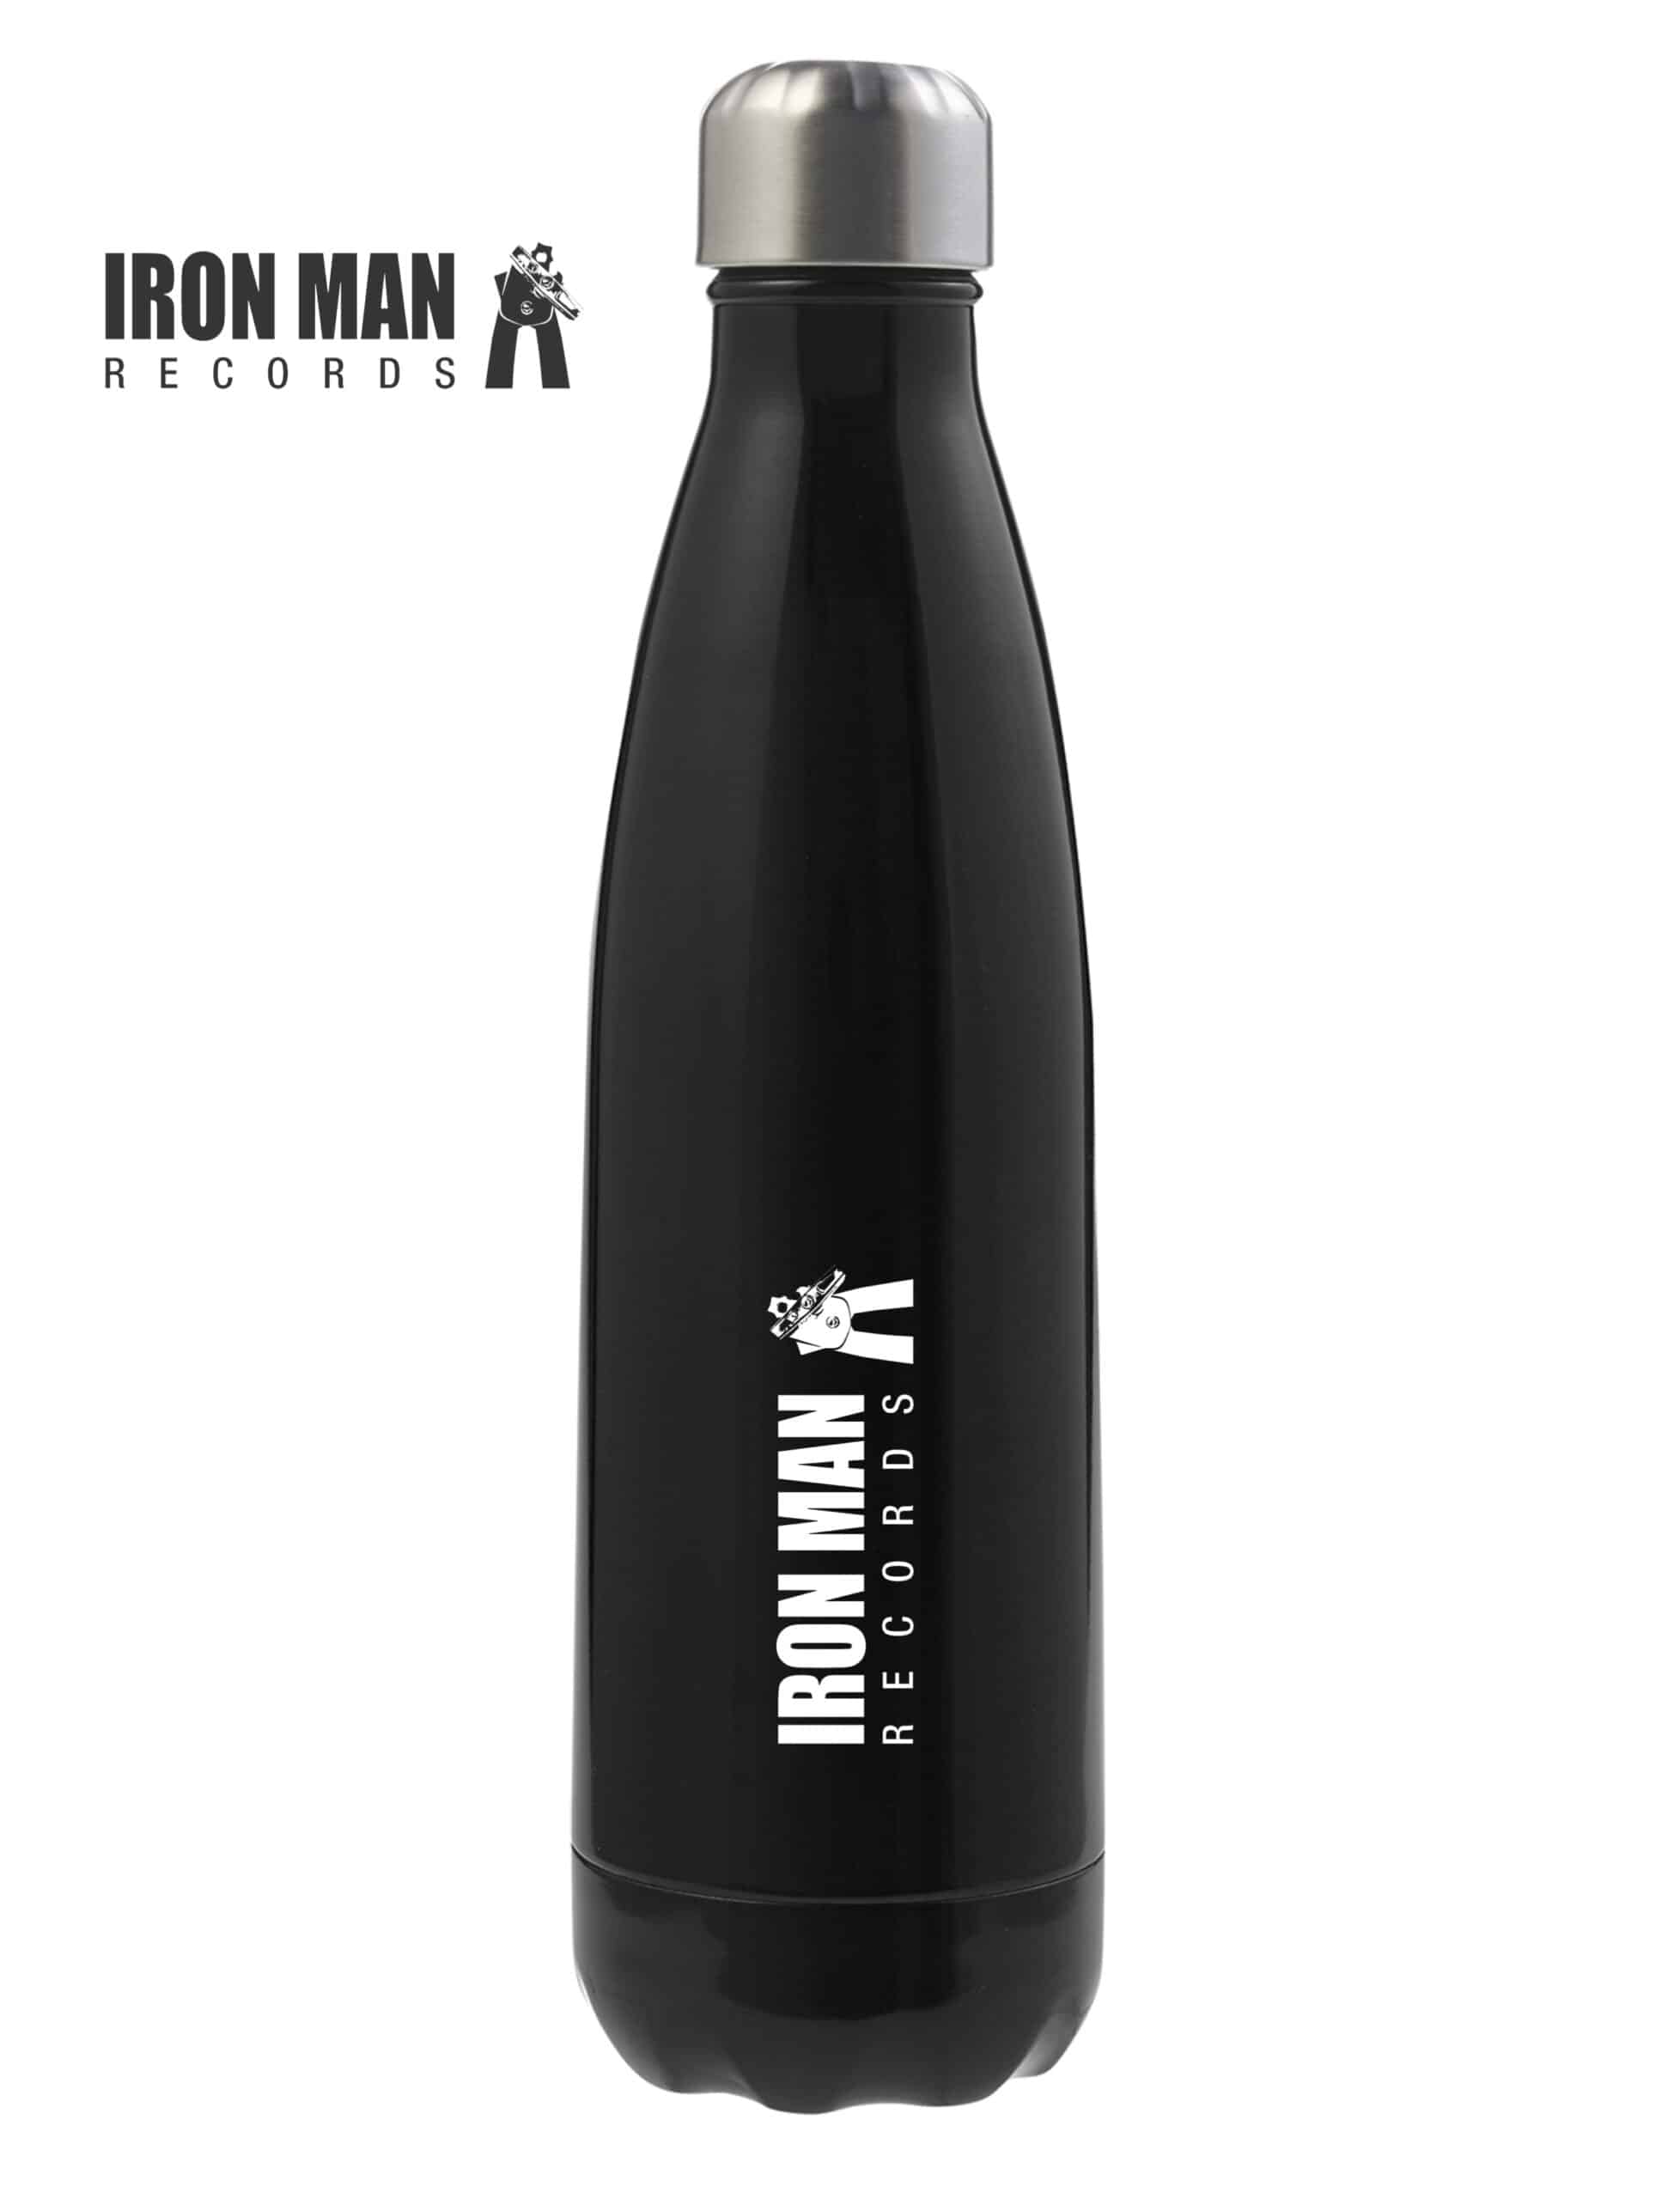 https://ironmanrecords.net/wp-content/uploads/2020/01/012541-8223-Iron-Man-Records-Visual1-scaled.jpg